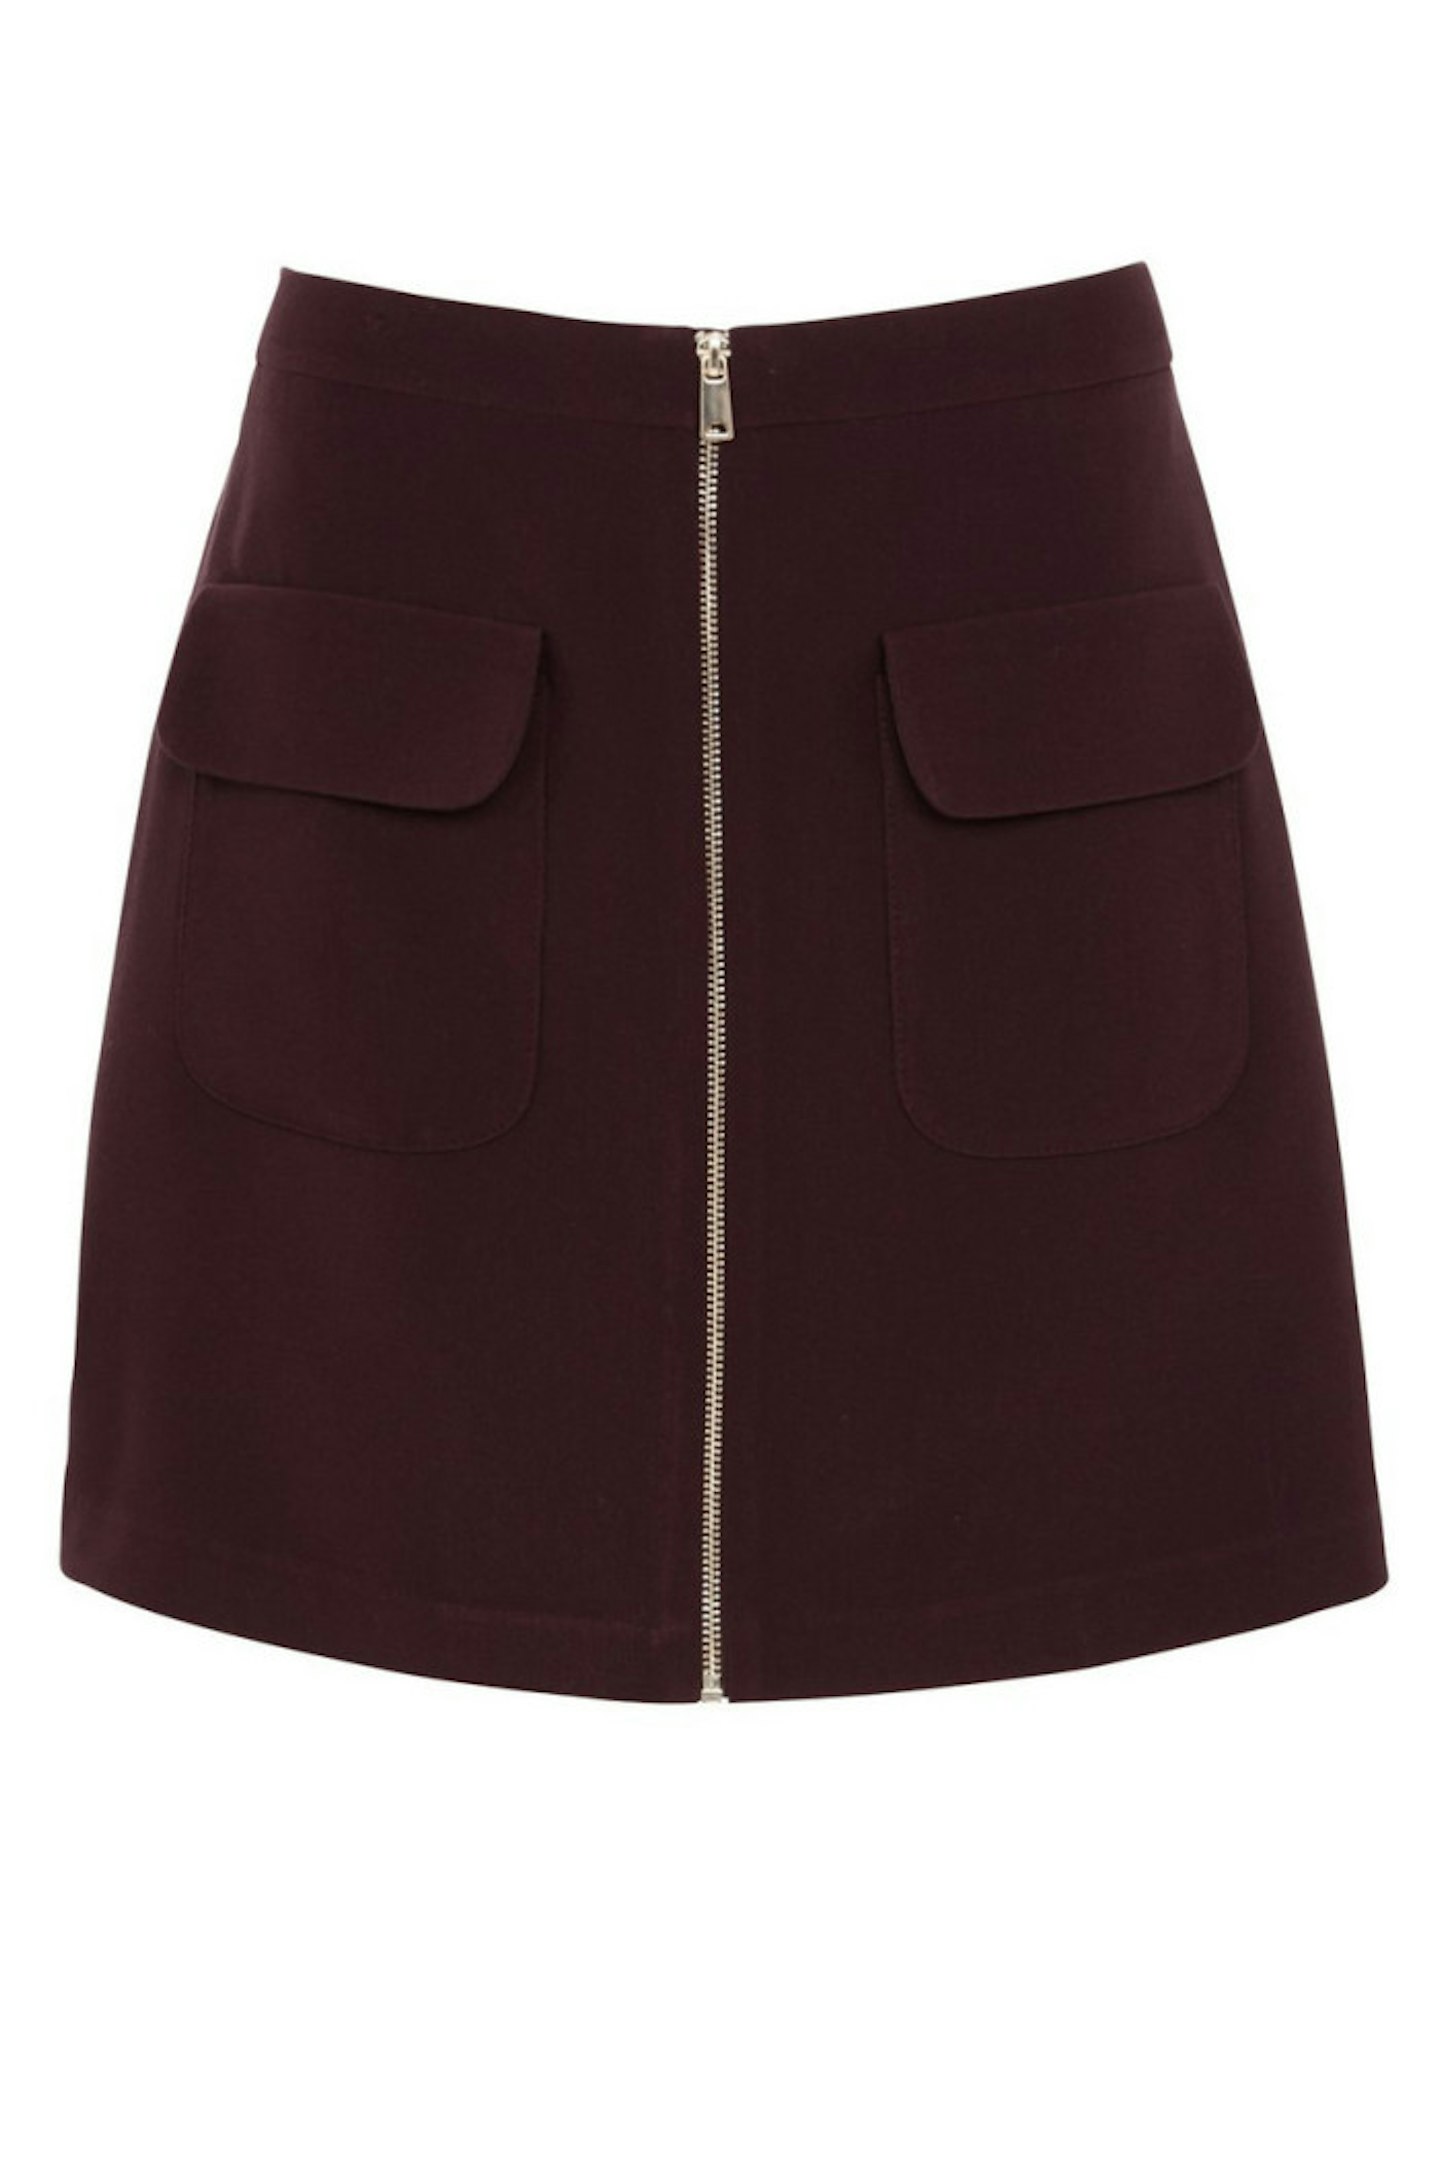 F&F Burgundy Mini Skirt, £16.00